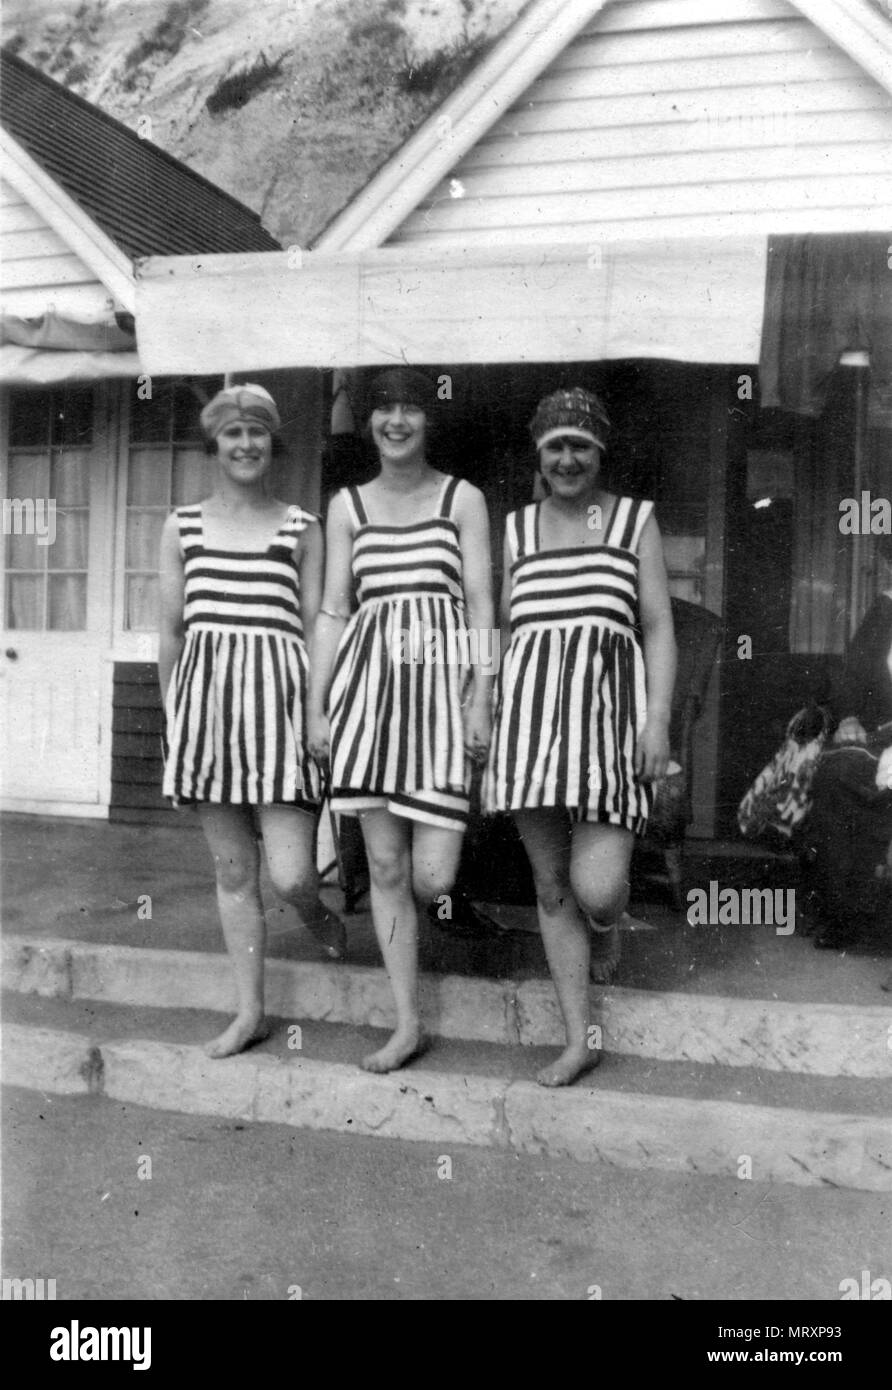 Fashion, swimwear, three women in the same striped swimsuits, 1920s ...